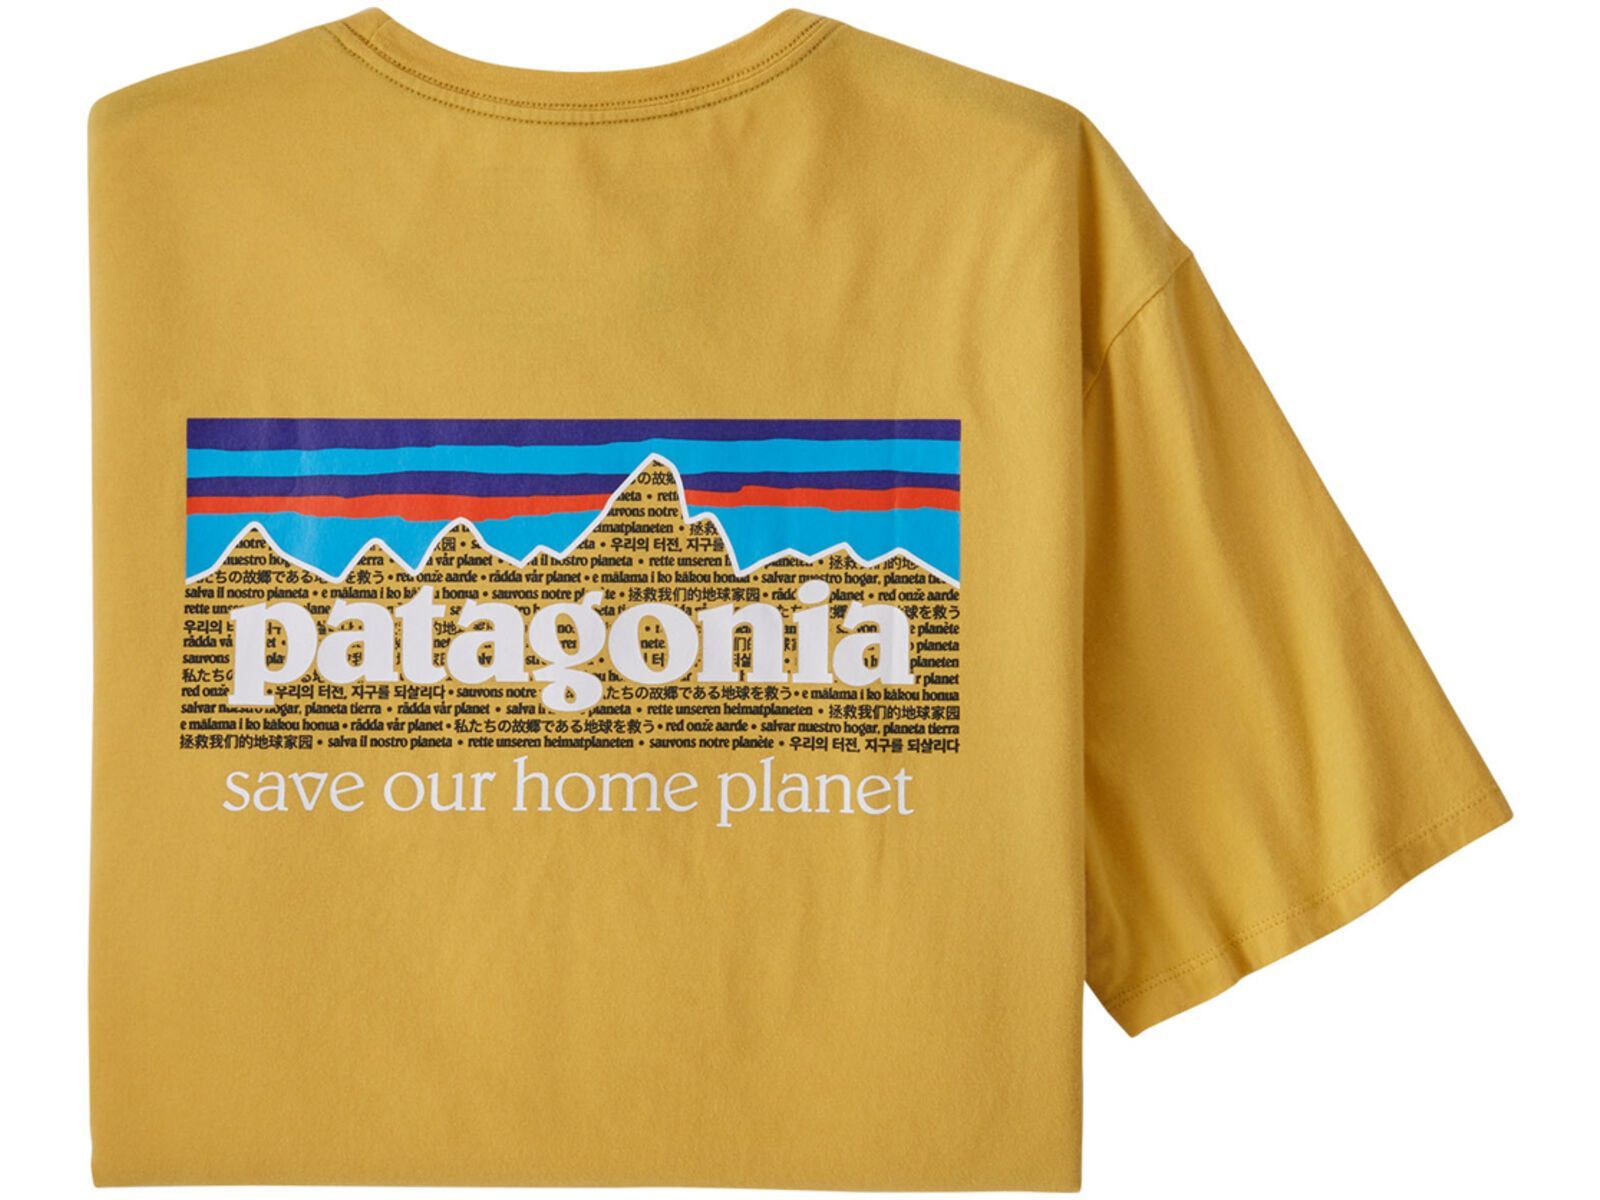 Patagonia Men's P-6 Mission Organic T-Shirt, surfboard yellow | Bild 1